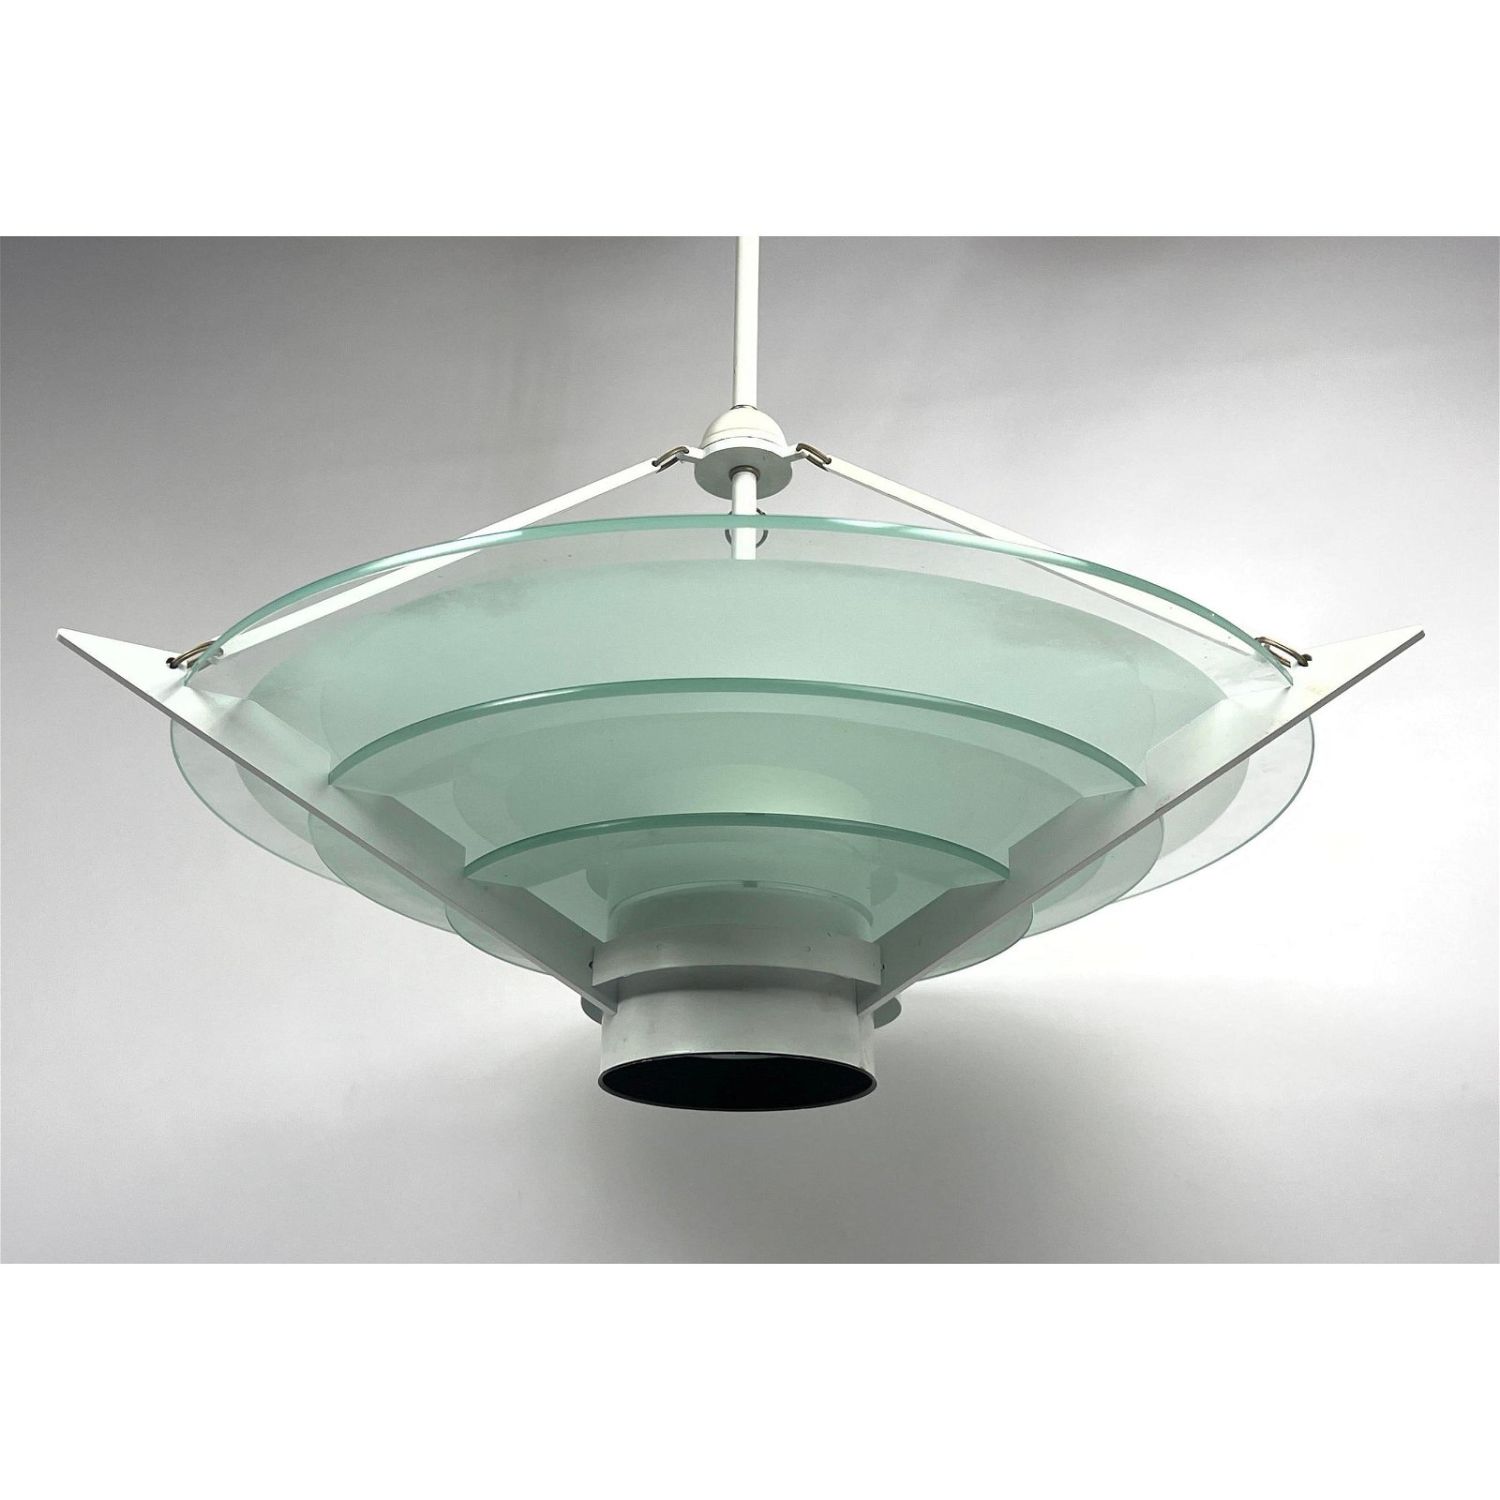 Canadian Modernist Glass Chandelier  362dbb